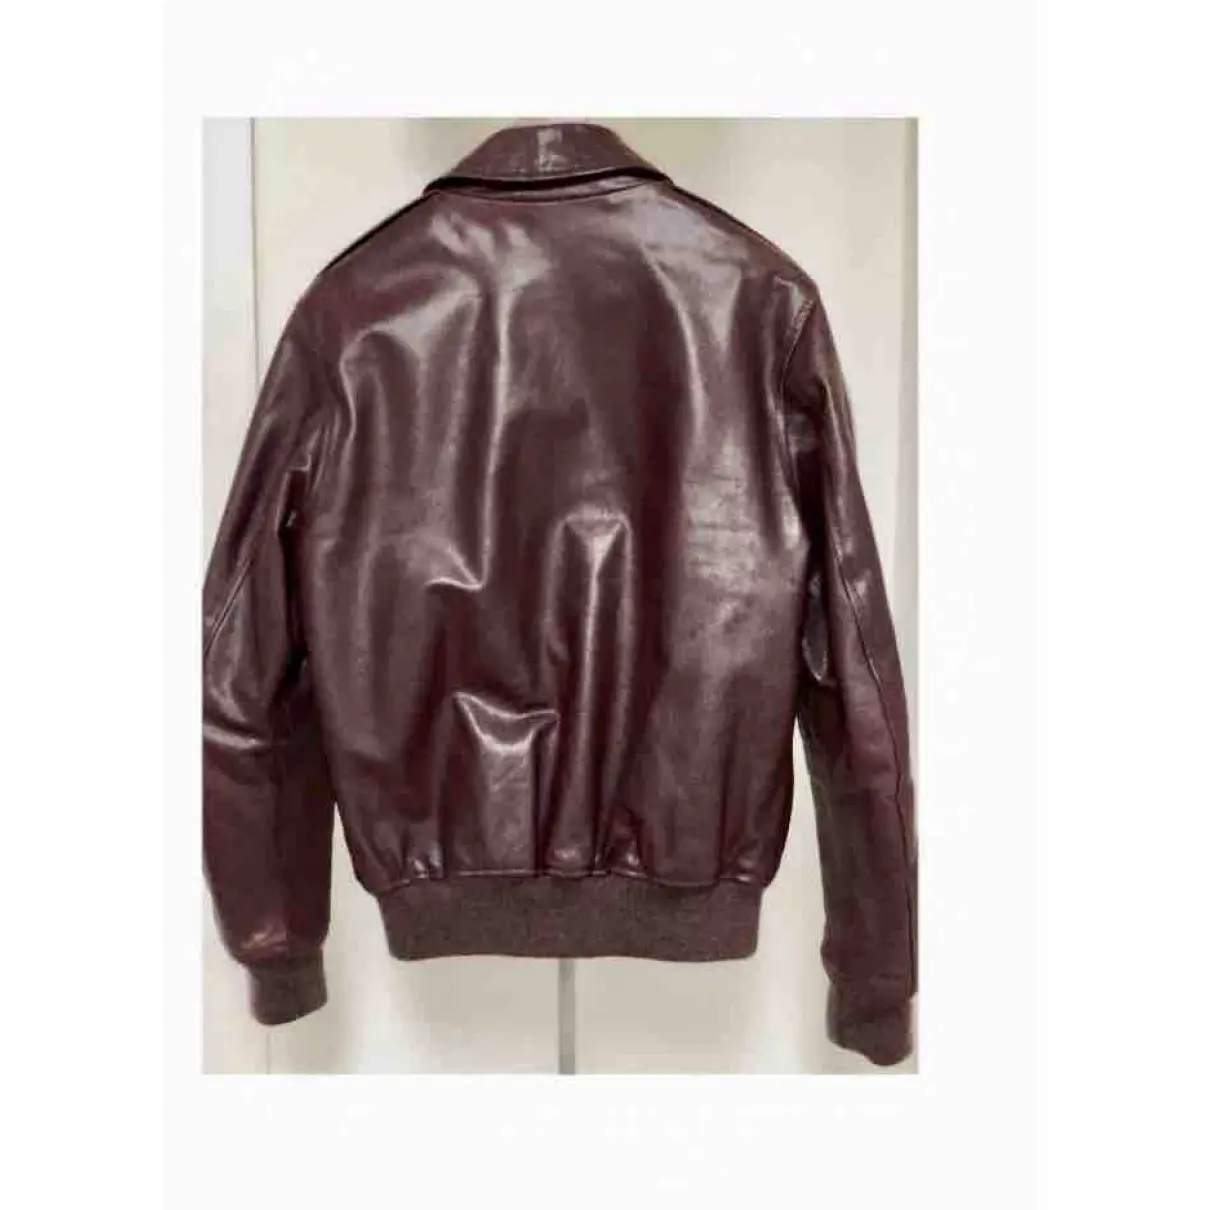 Buy Blauer Leather jacket online